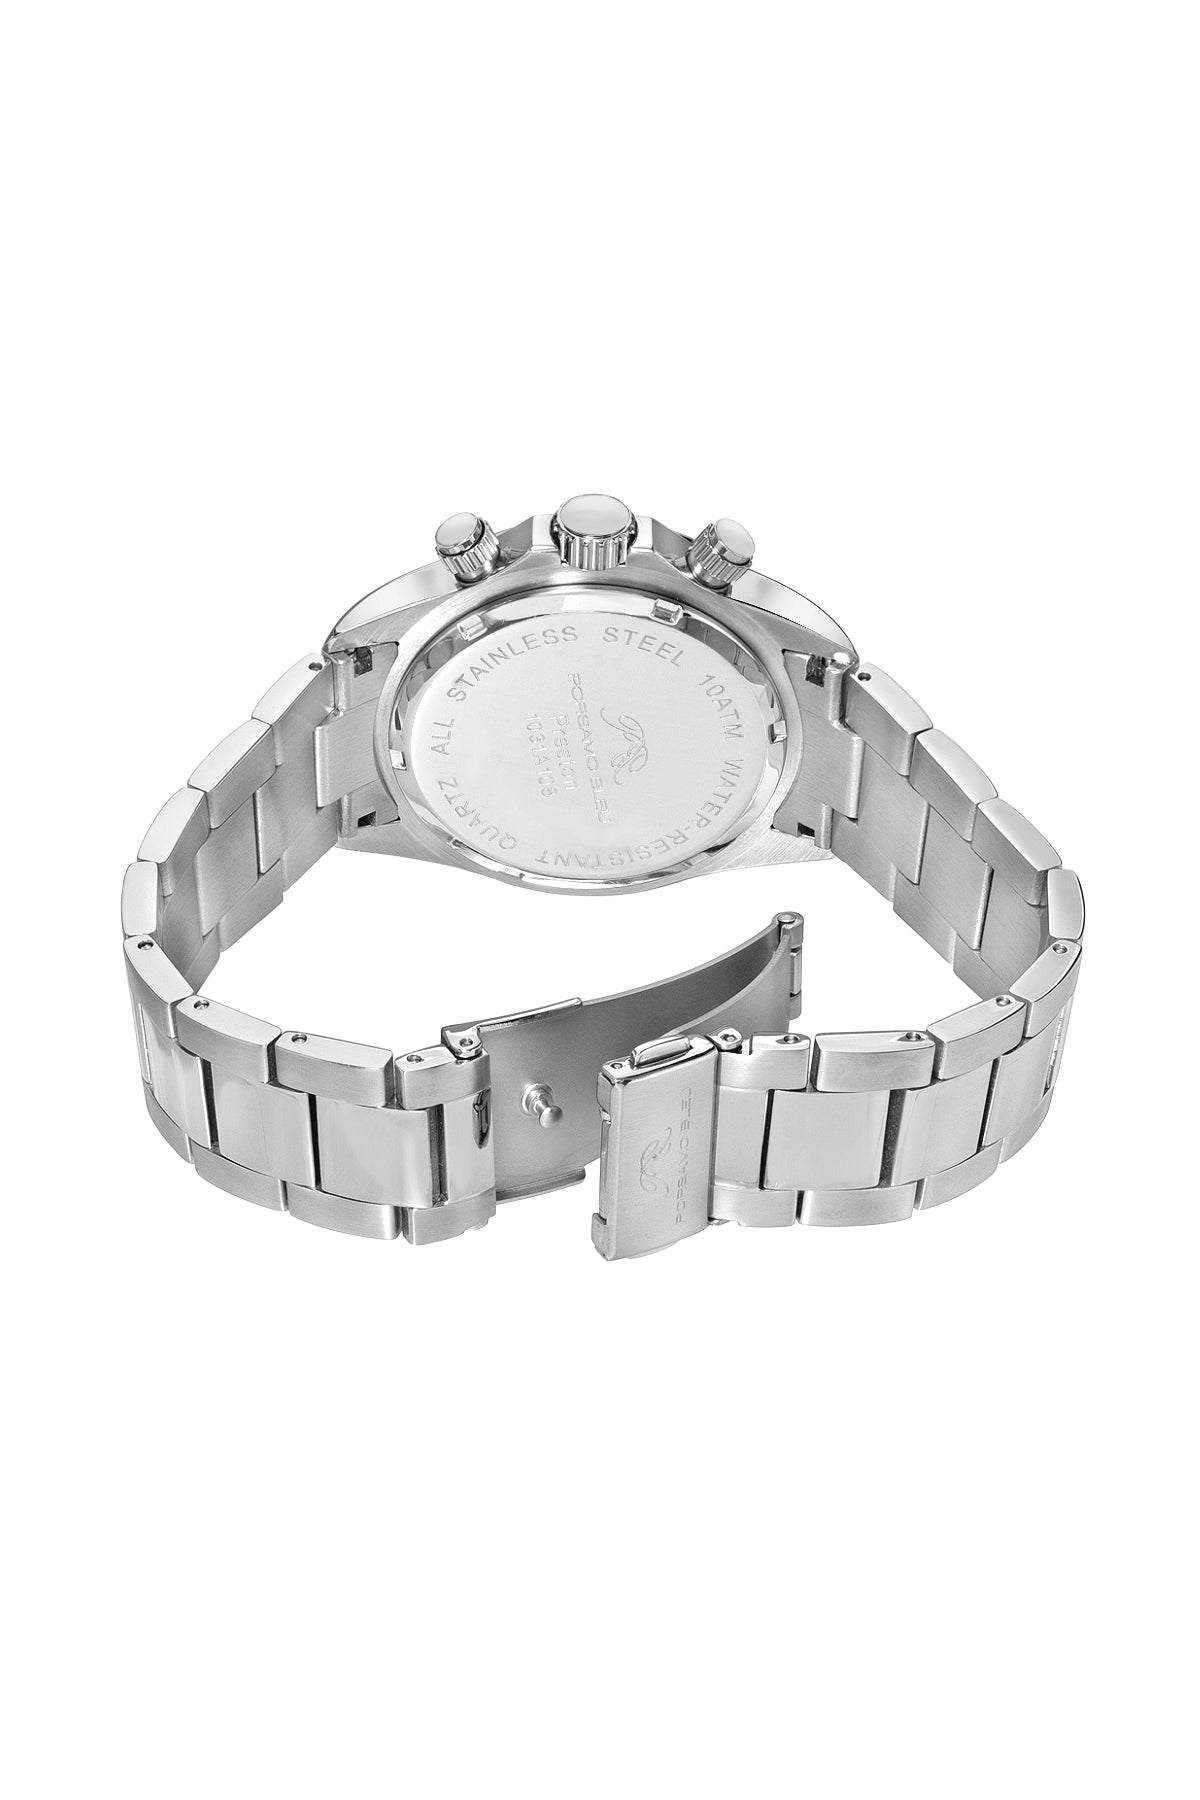 Porsamo Bleu Preston Luxury Multifunction Men's Stainless Steel Watch, Silver, Blue 1033APRS